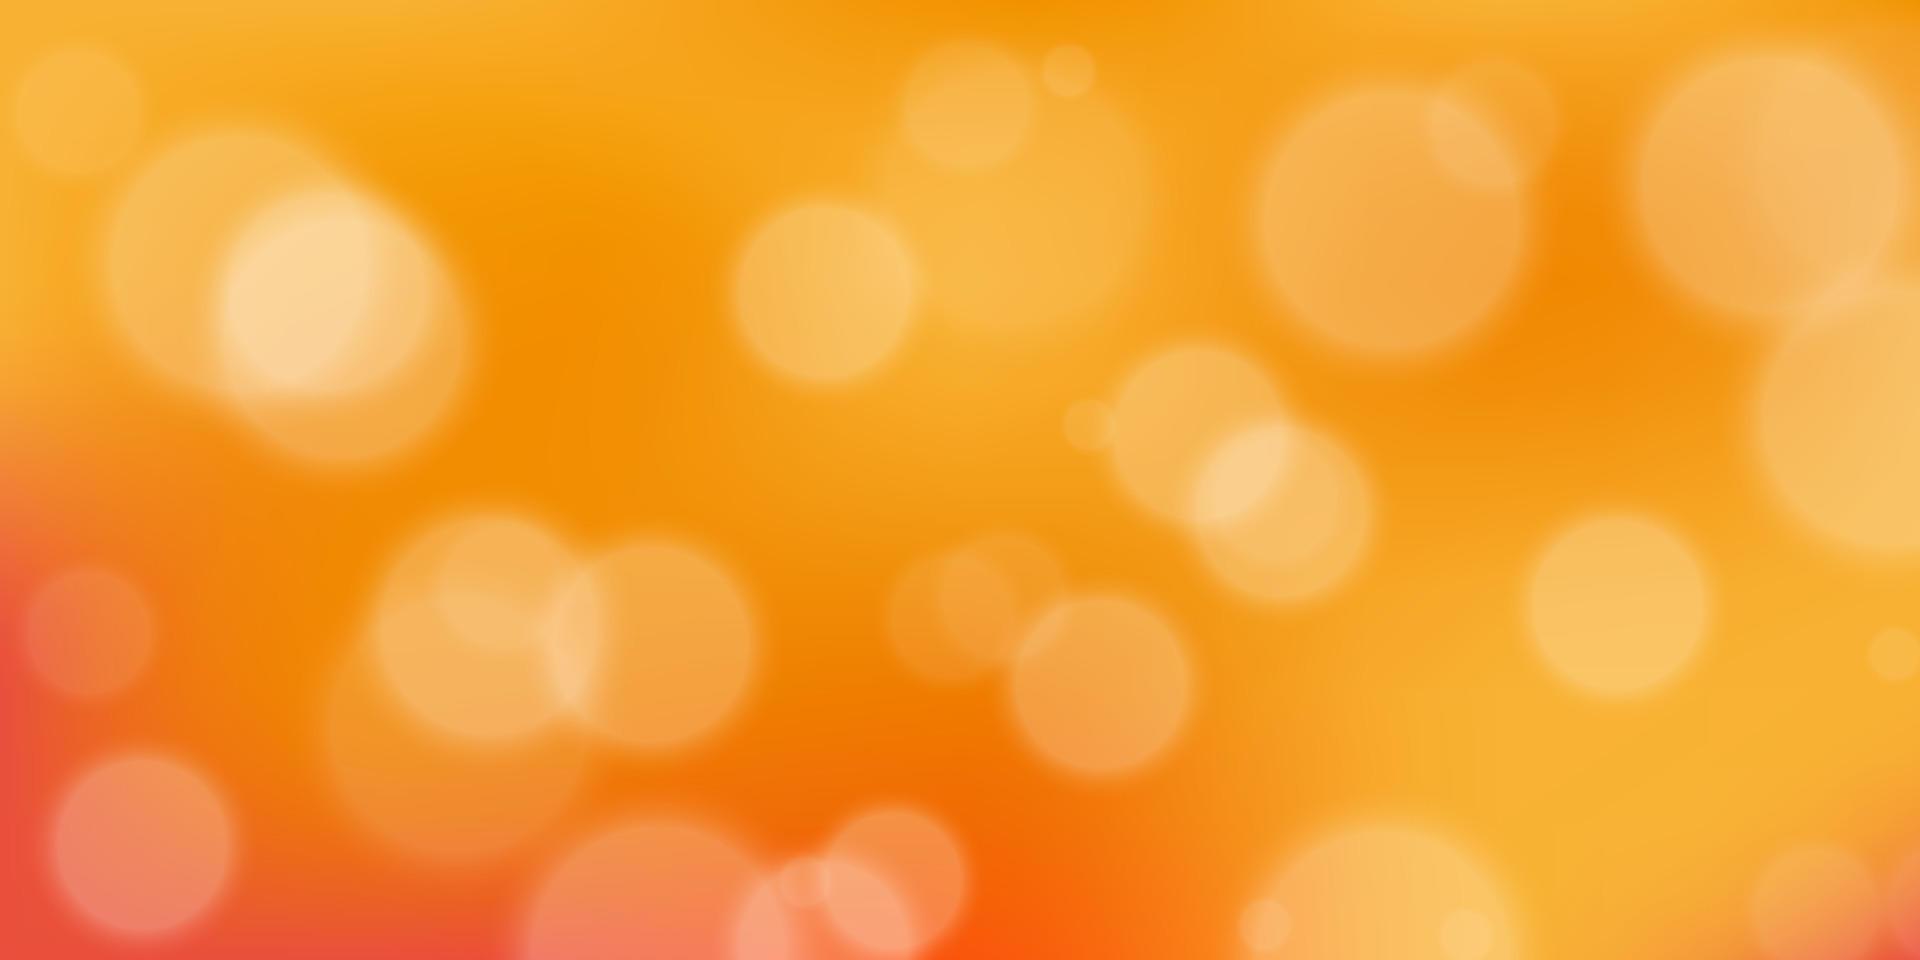 abstrakter orangefarbener Bokeh-Hintergrund. Vektor-Illustration eps10 vektor